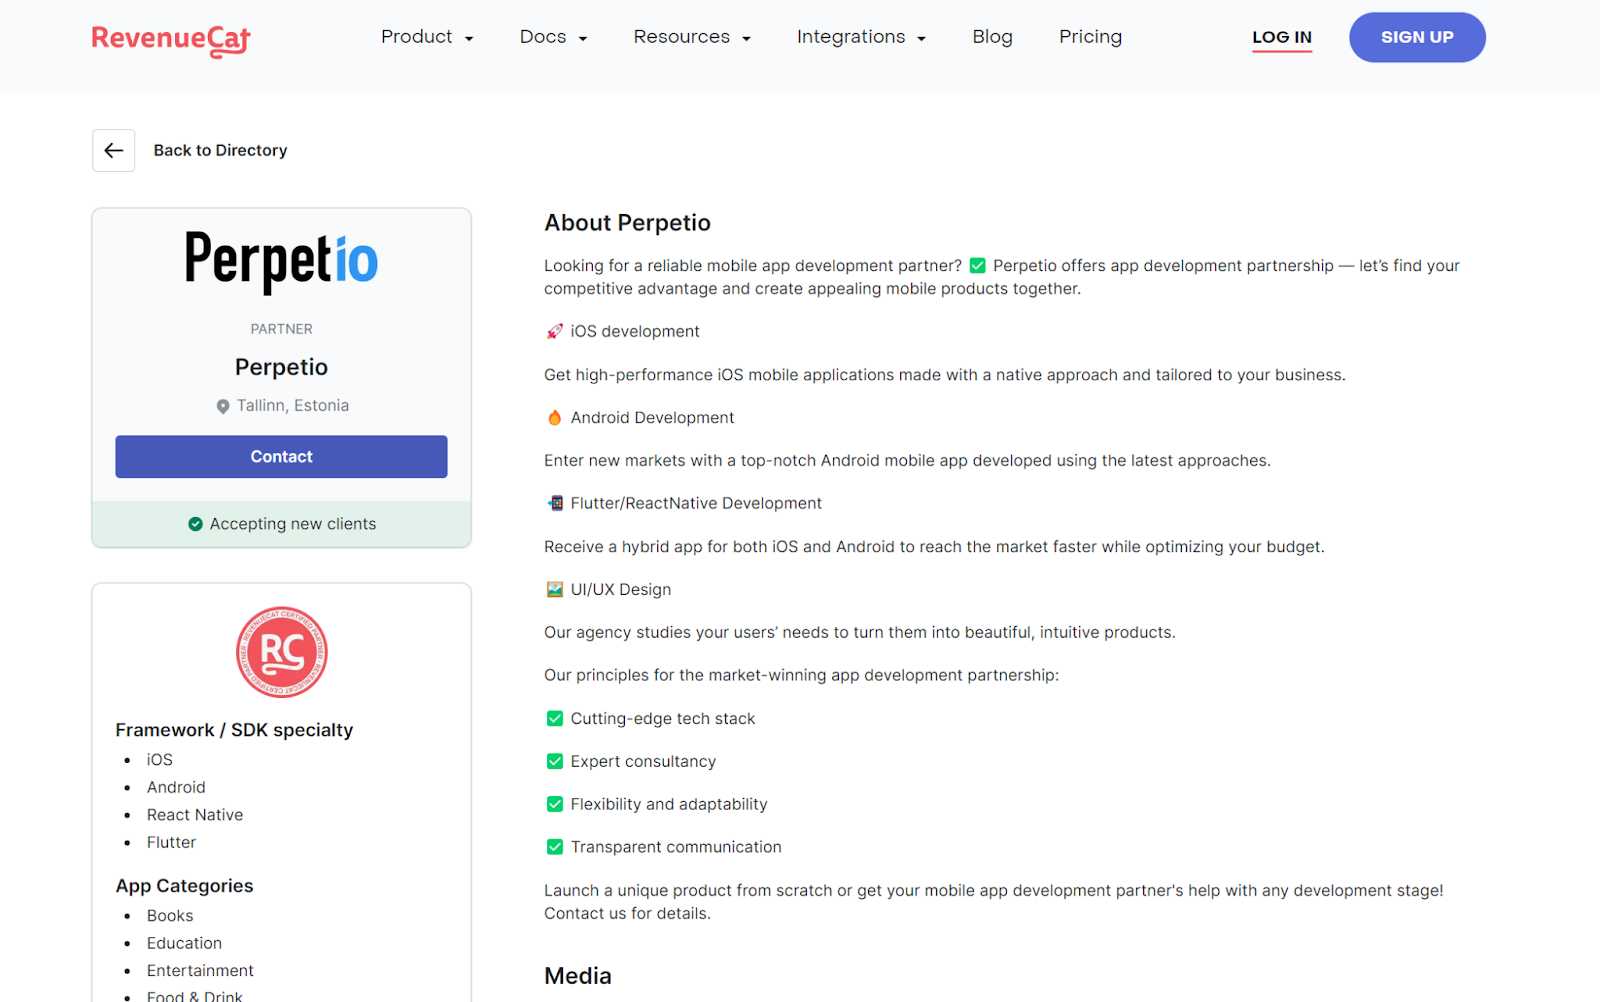 Perpetio is Now an Official RevenueCat Partner